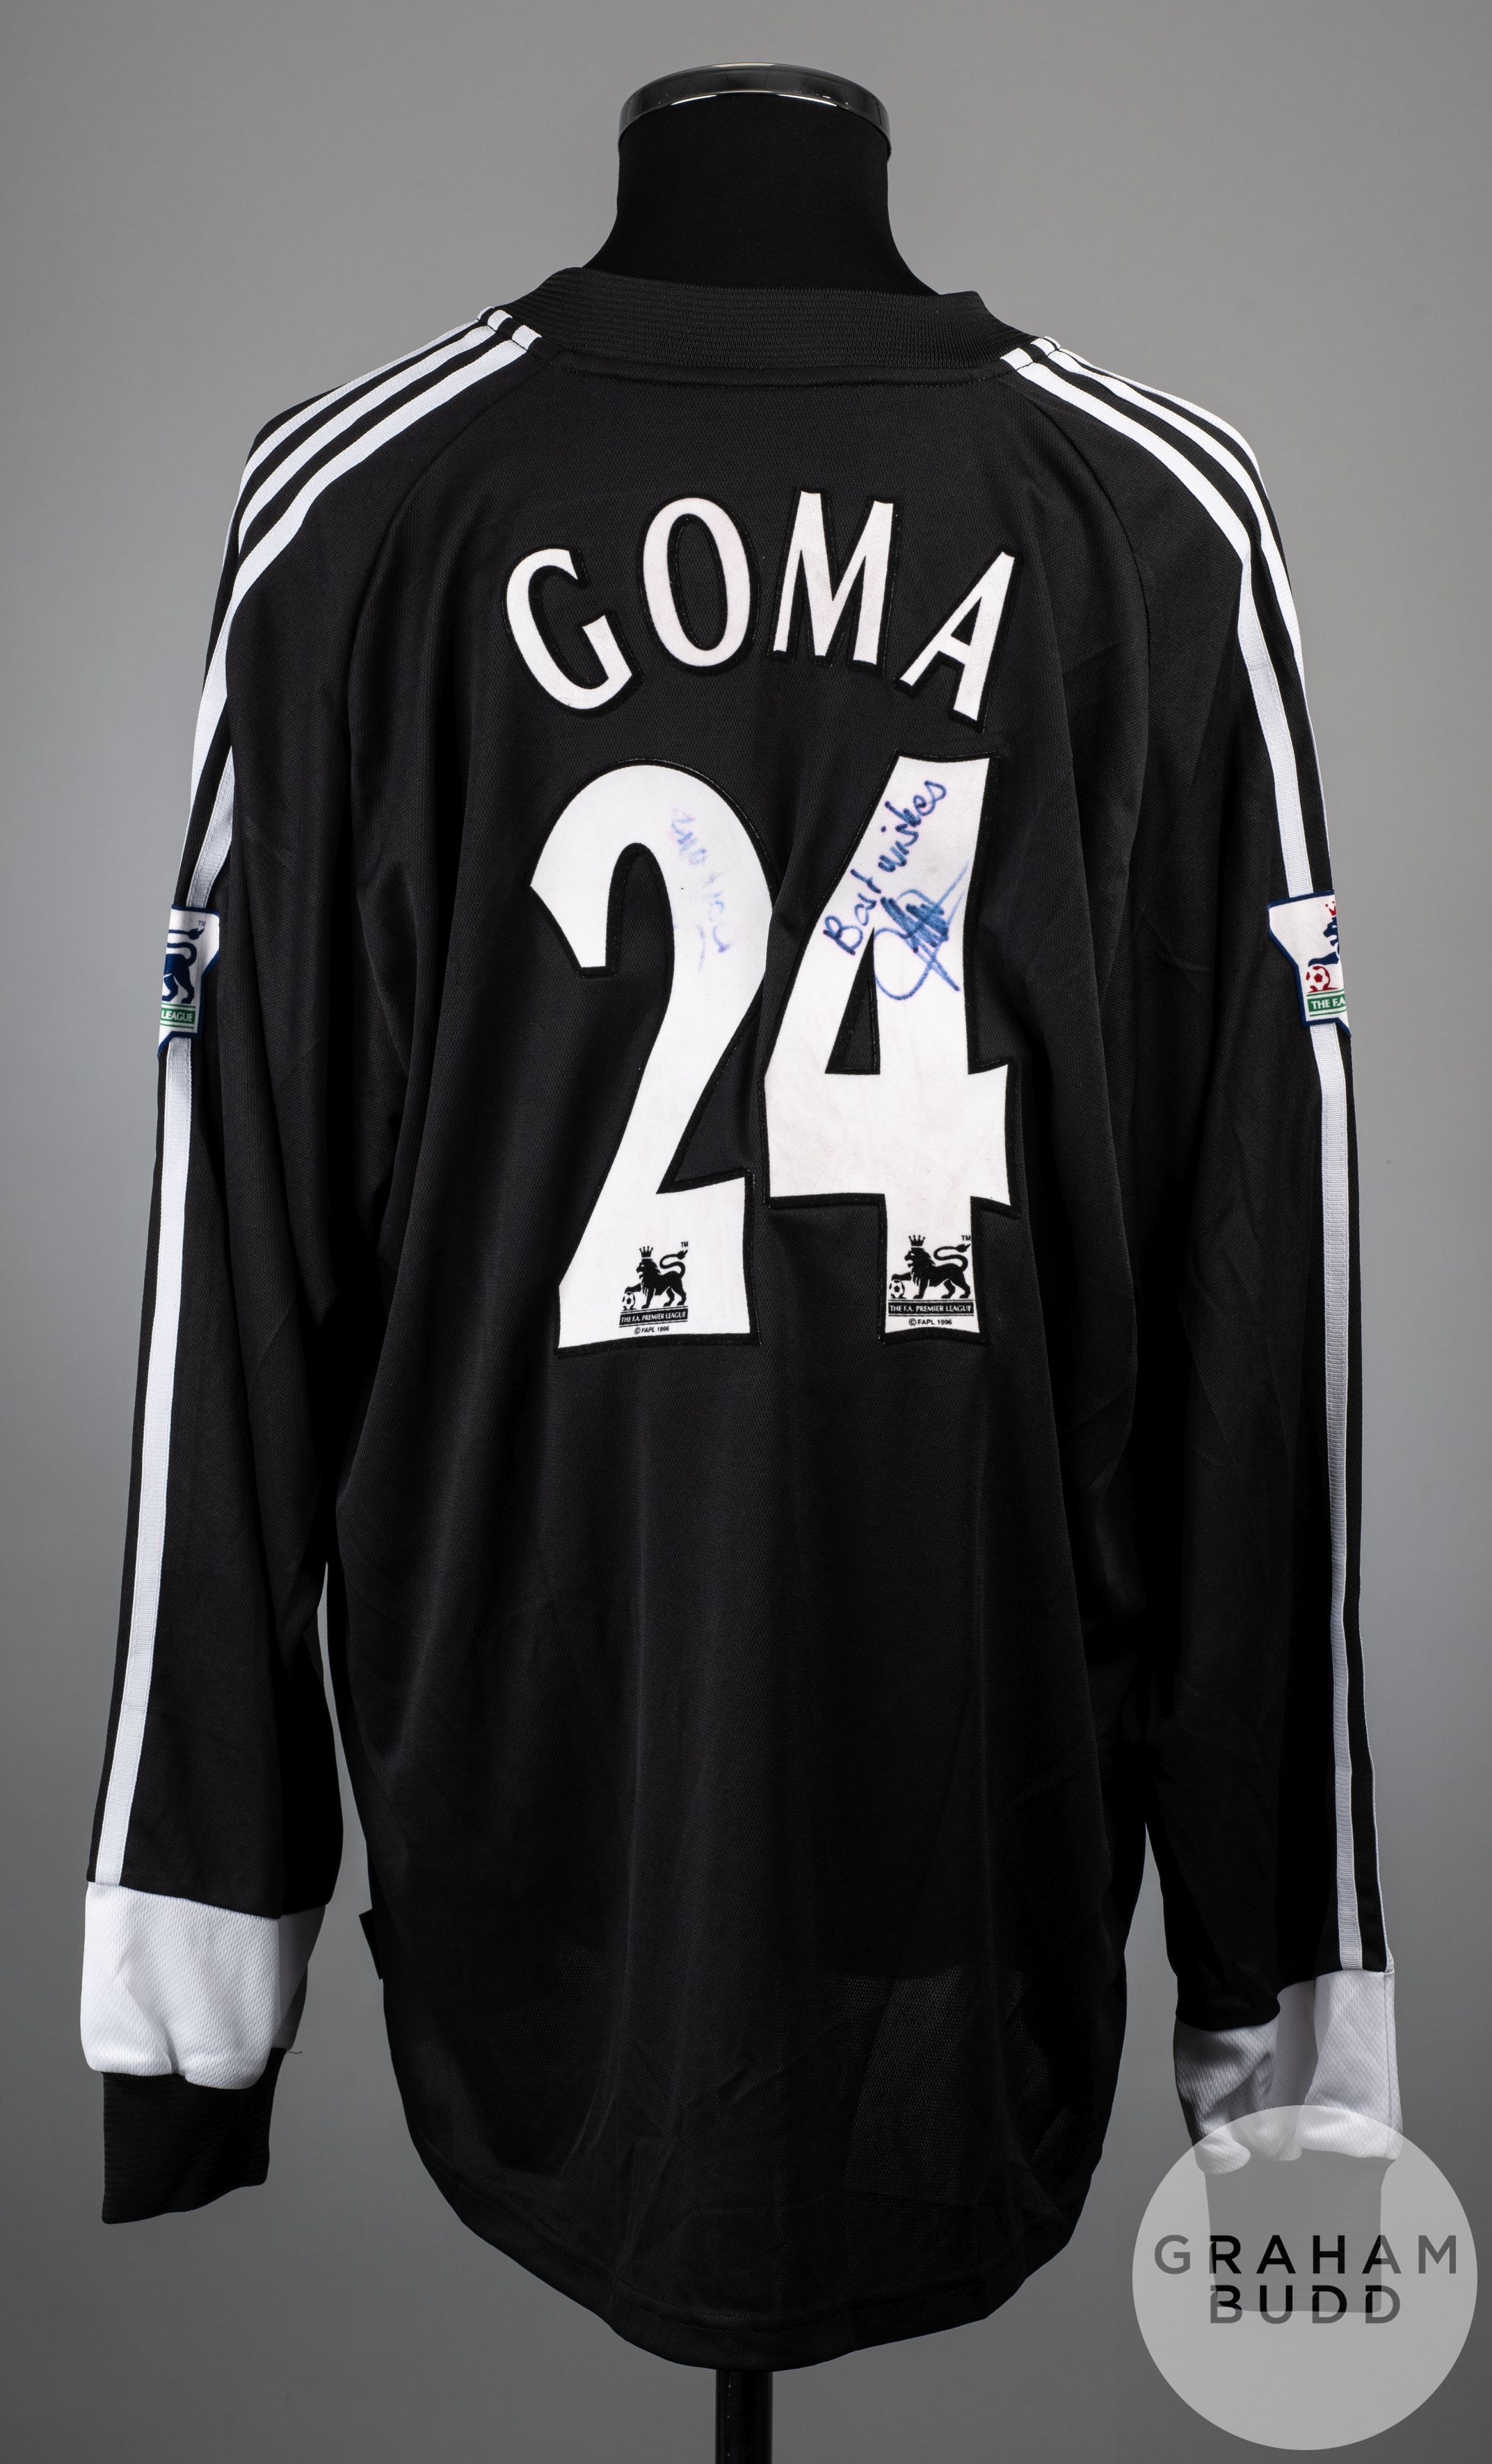 Alain Goma signed black and white No.24 Fulham match worn long-sleeved shirt, 2002-03 - Image 2 of 2